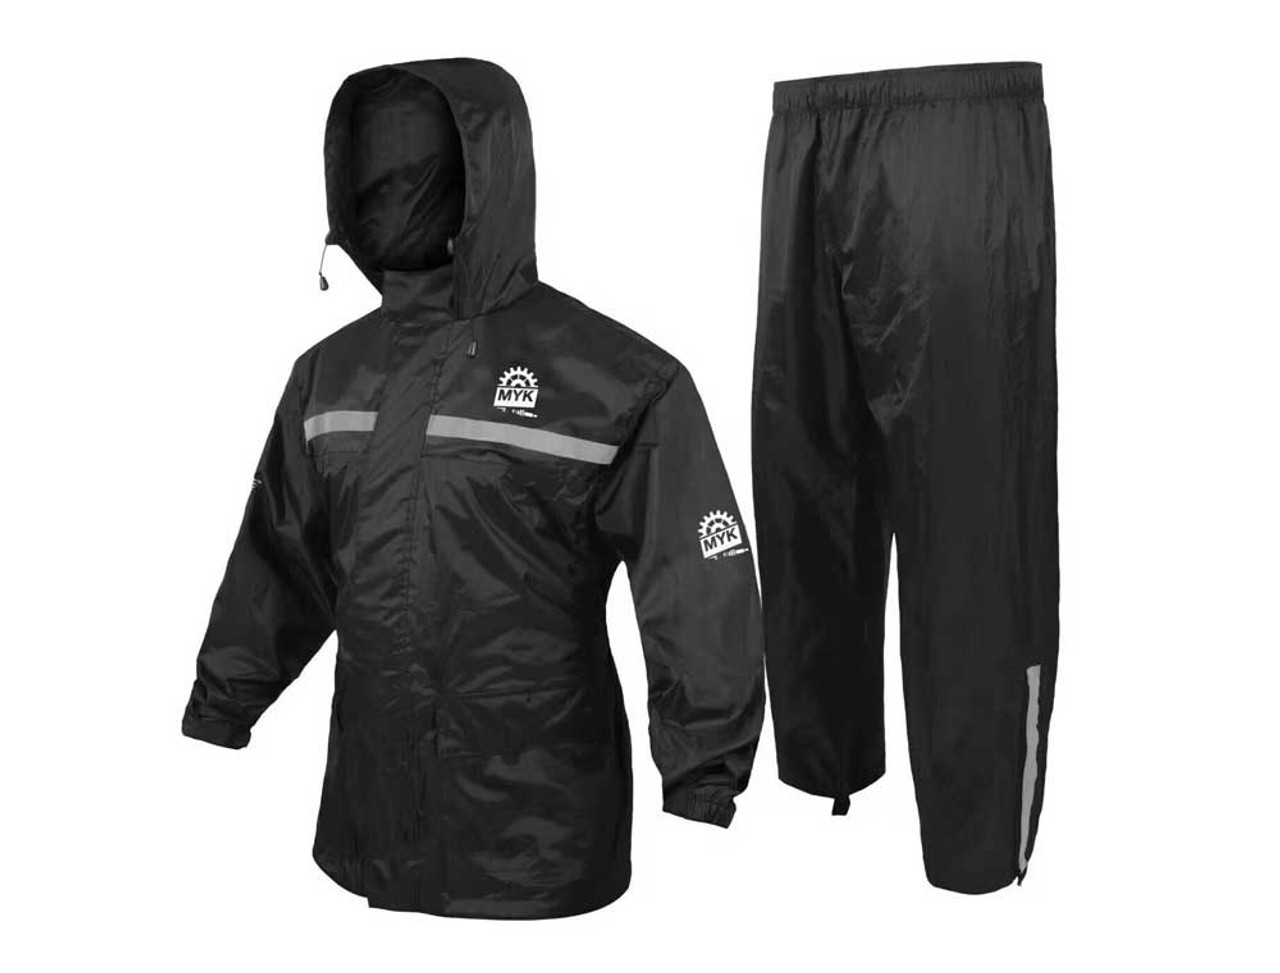 Unisex Reflective Waterproof Rain Suit Gear | Size: M, L, XL